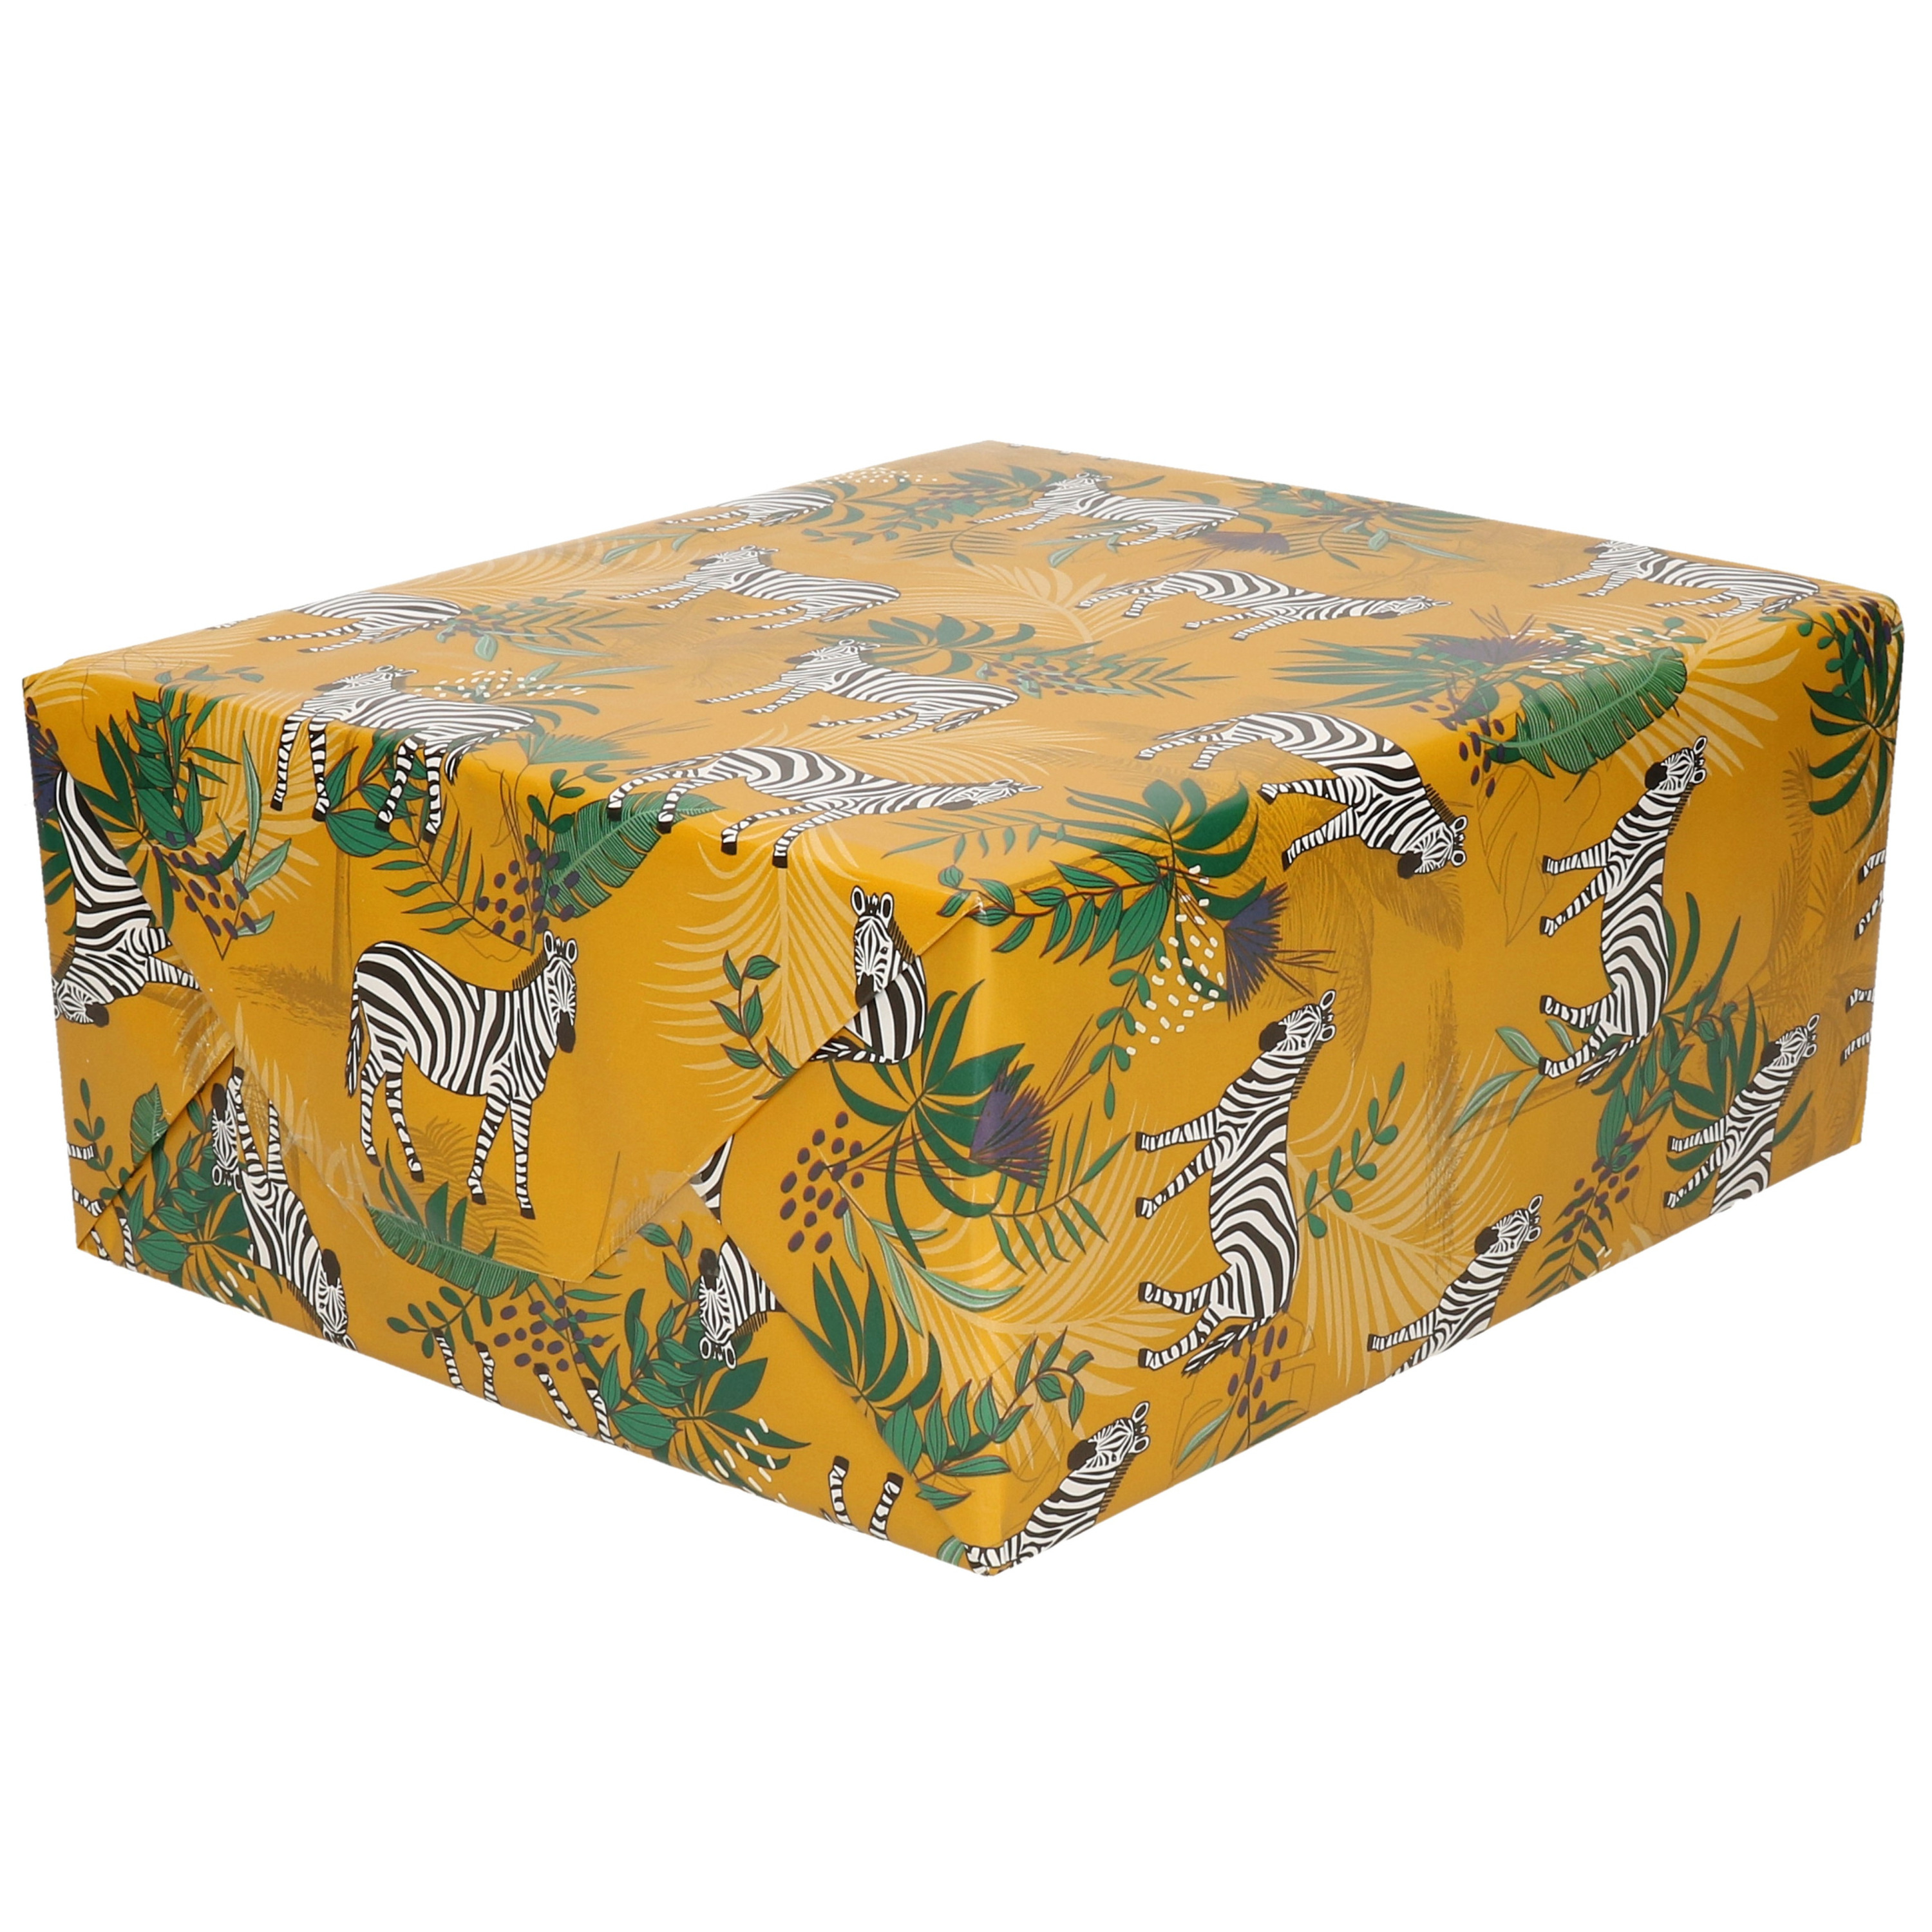 Inpakpapier-cadeaupapier bruin met zebra design 200 x 70 cm